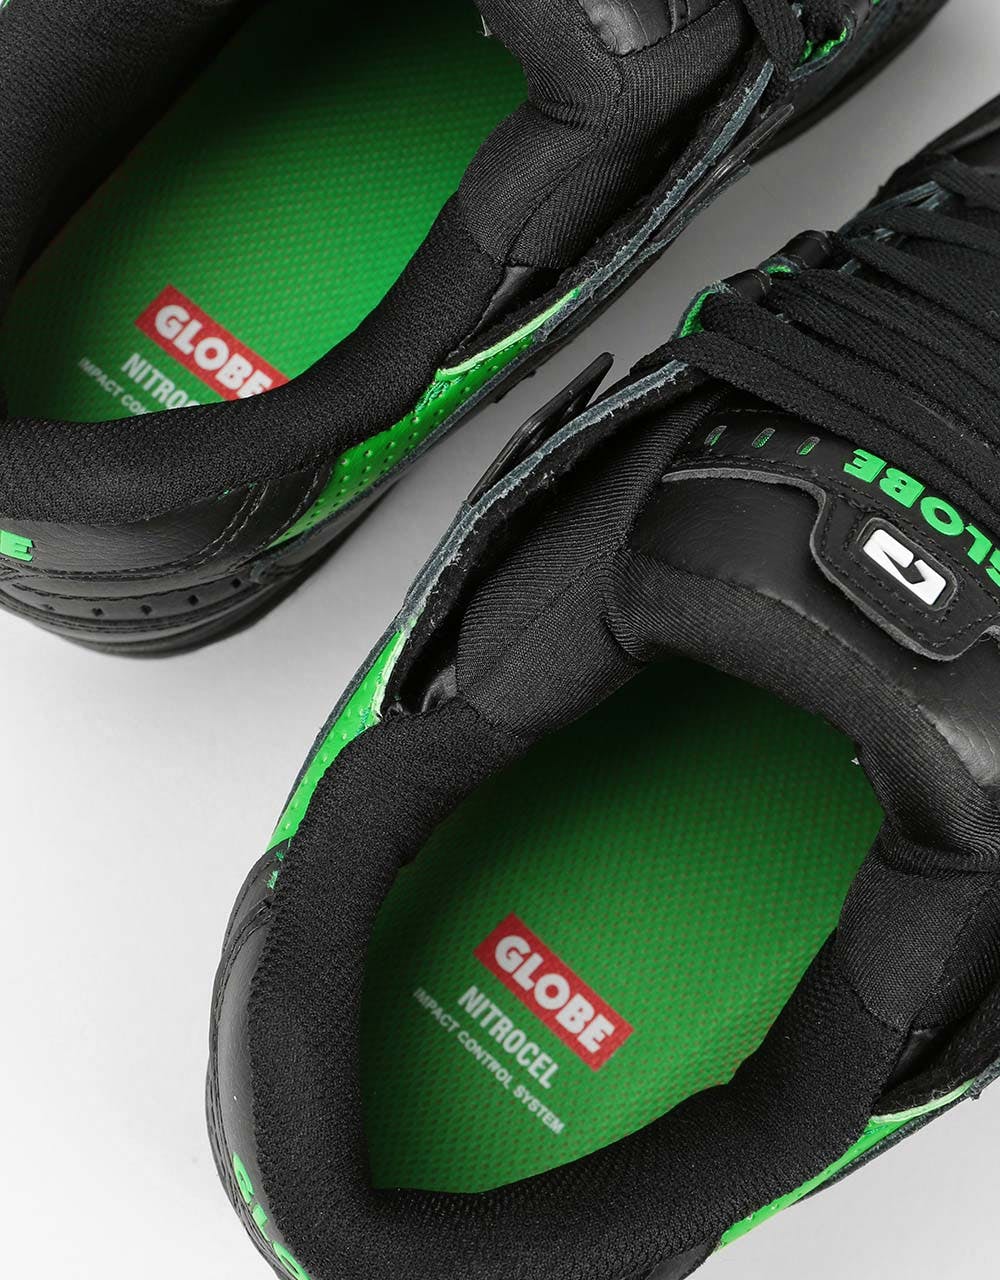 Globe Sabre Skate Shoes - Black/Moto Green